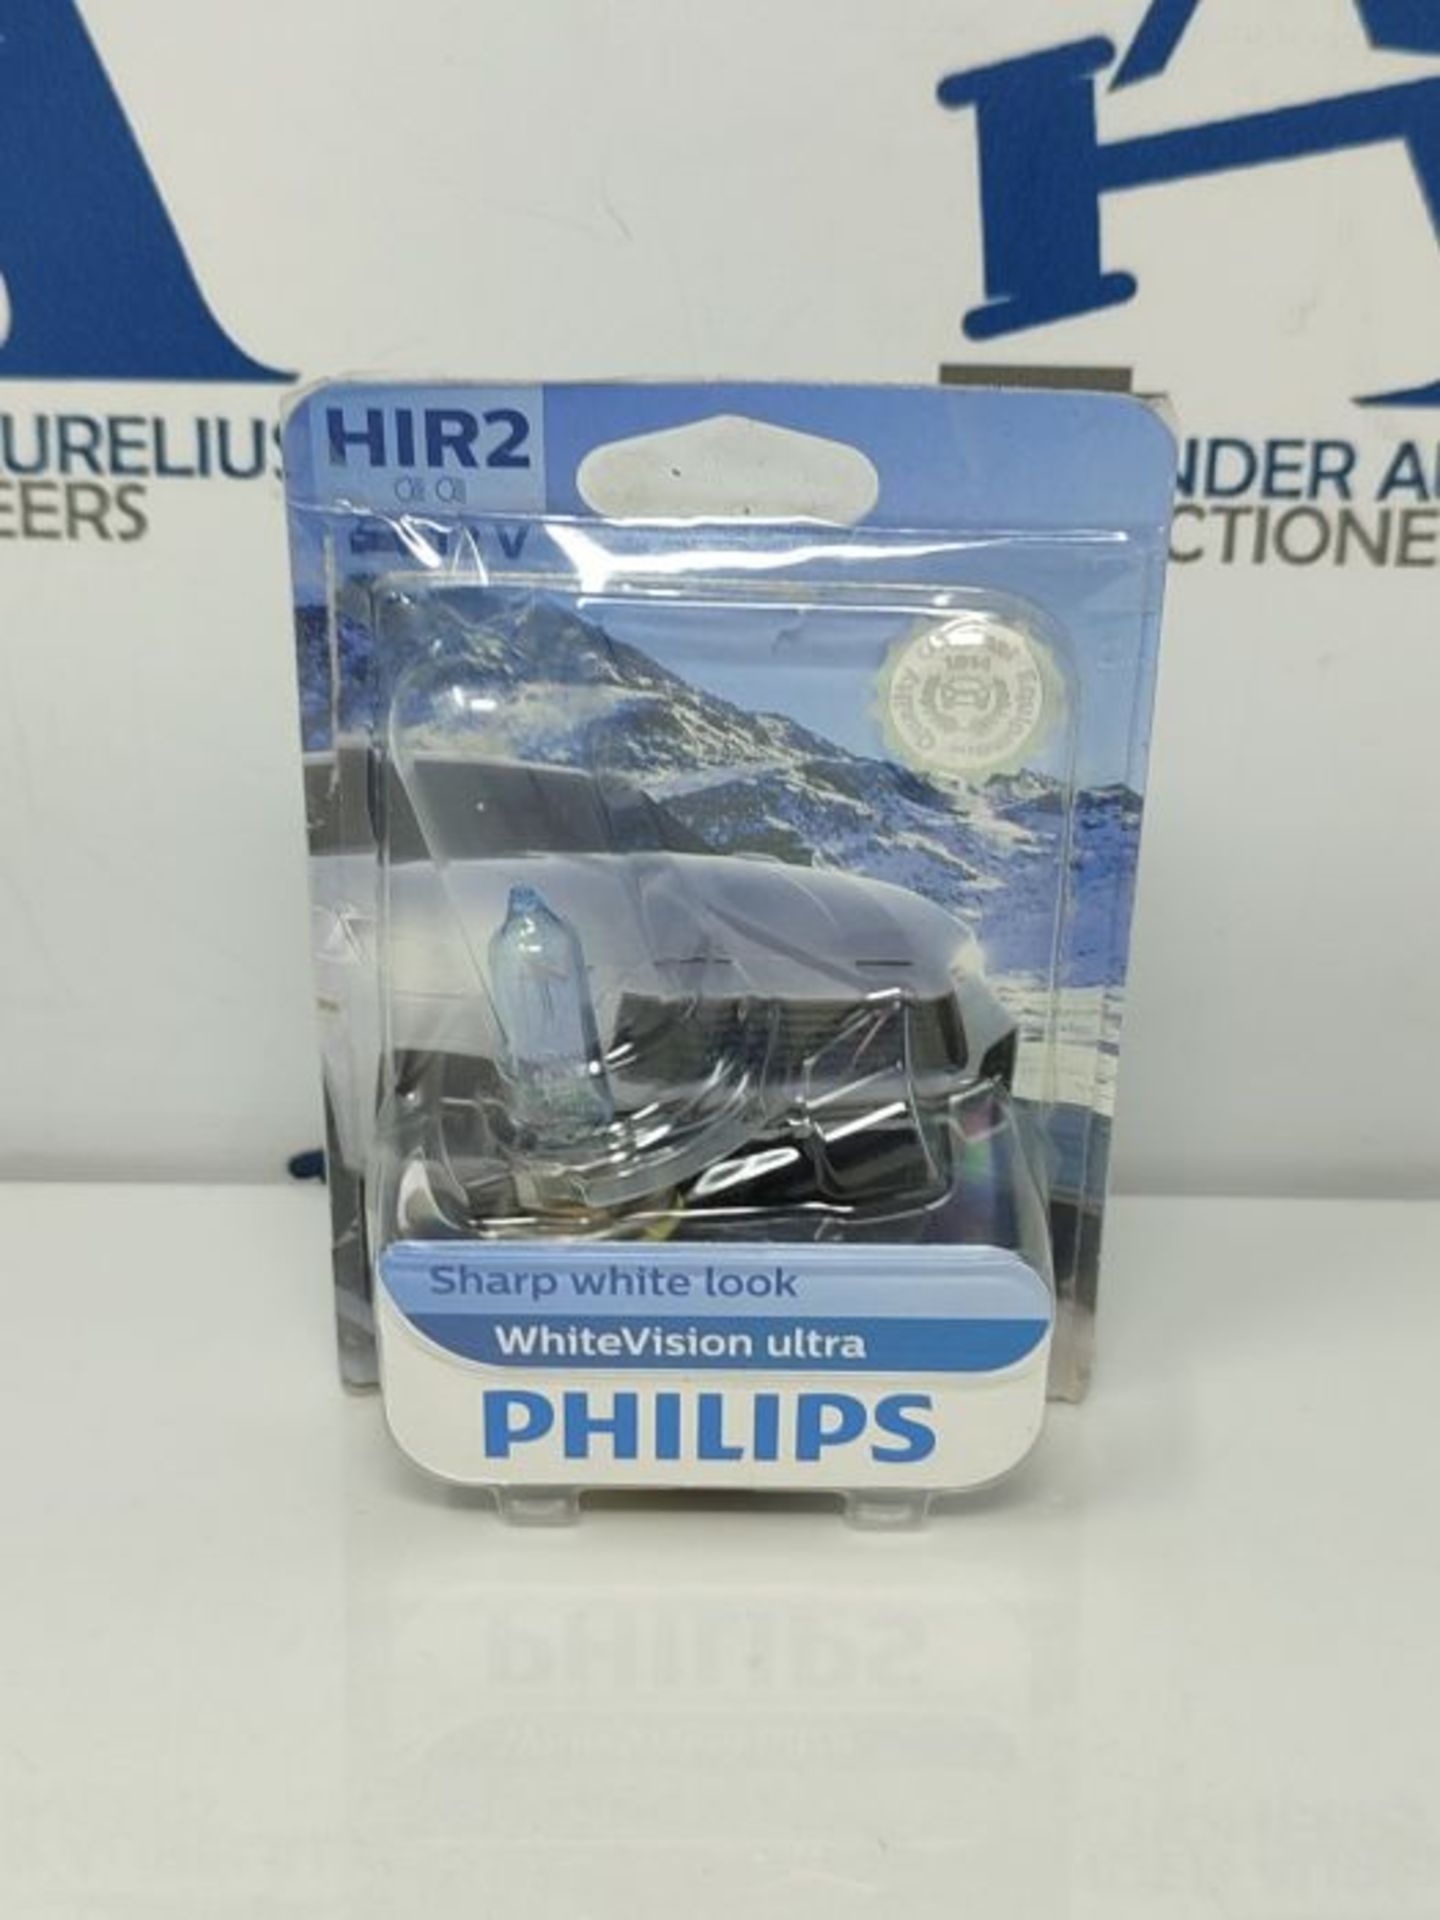 Philips WhiteVision ultra HIR2 car headlight bulb, single blister - Image 2 of 3